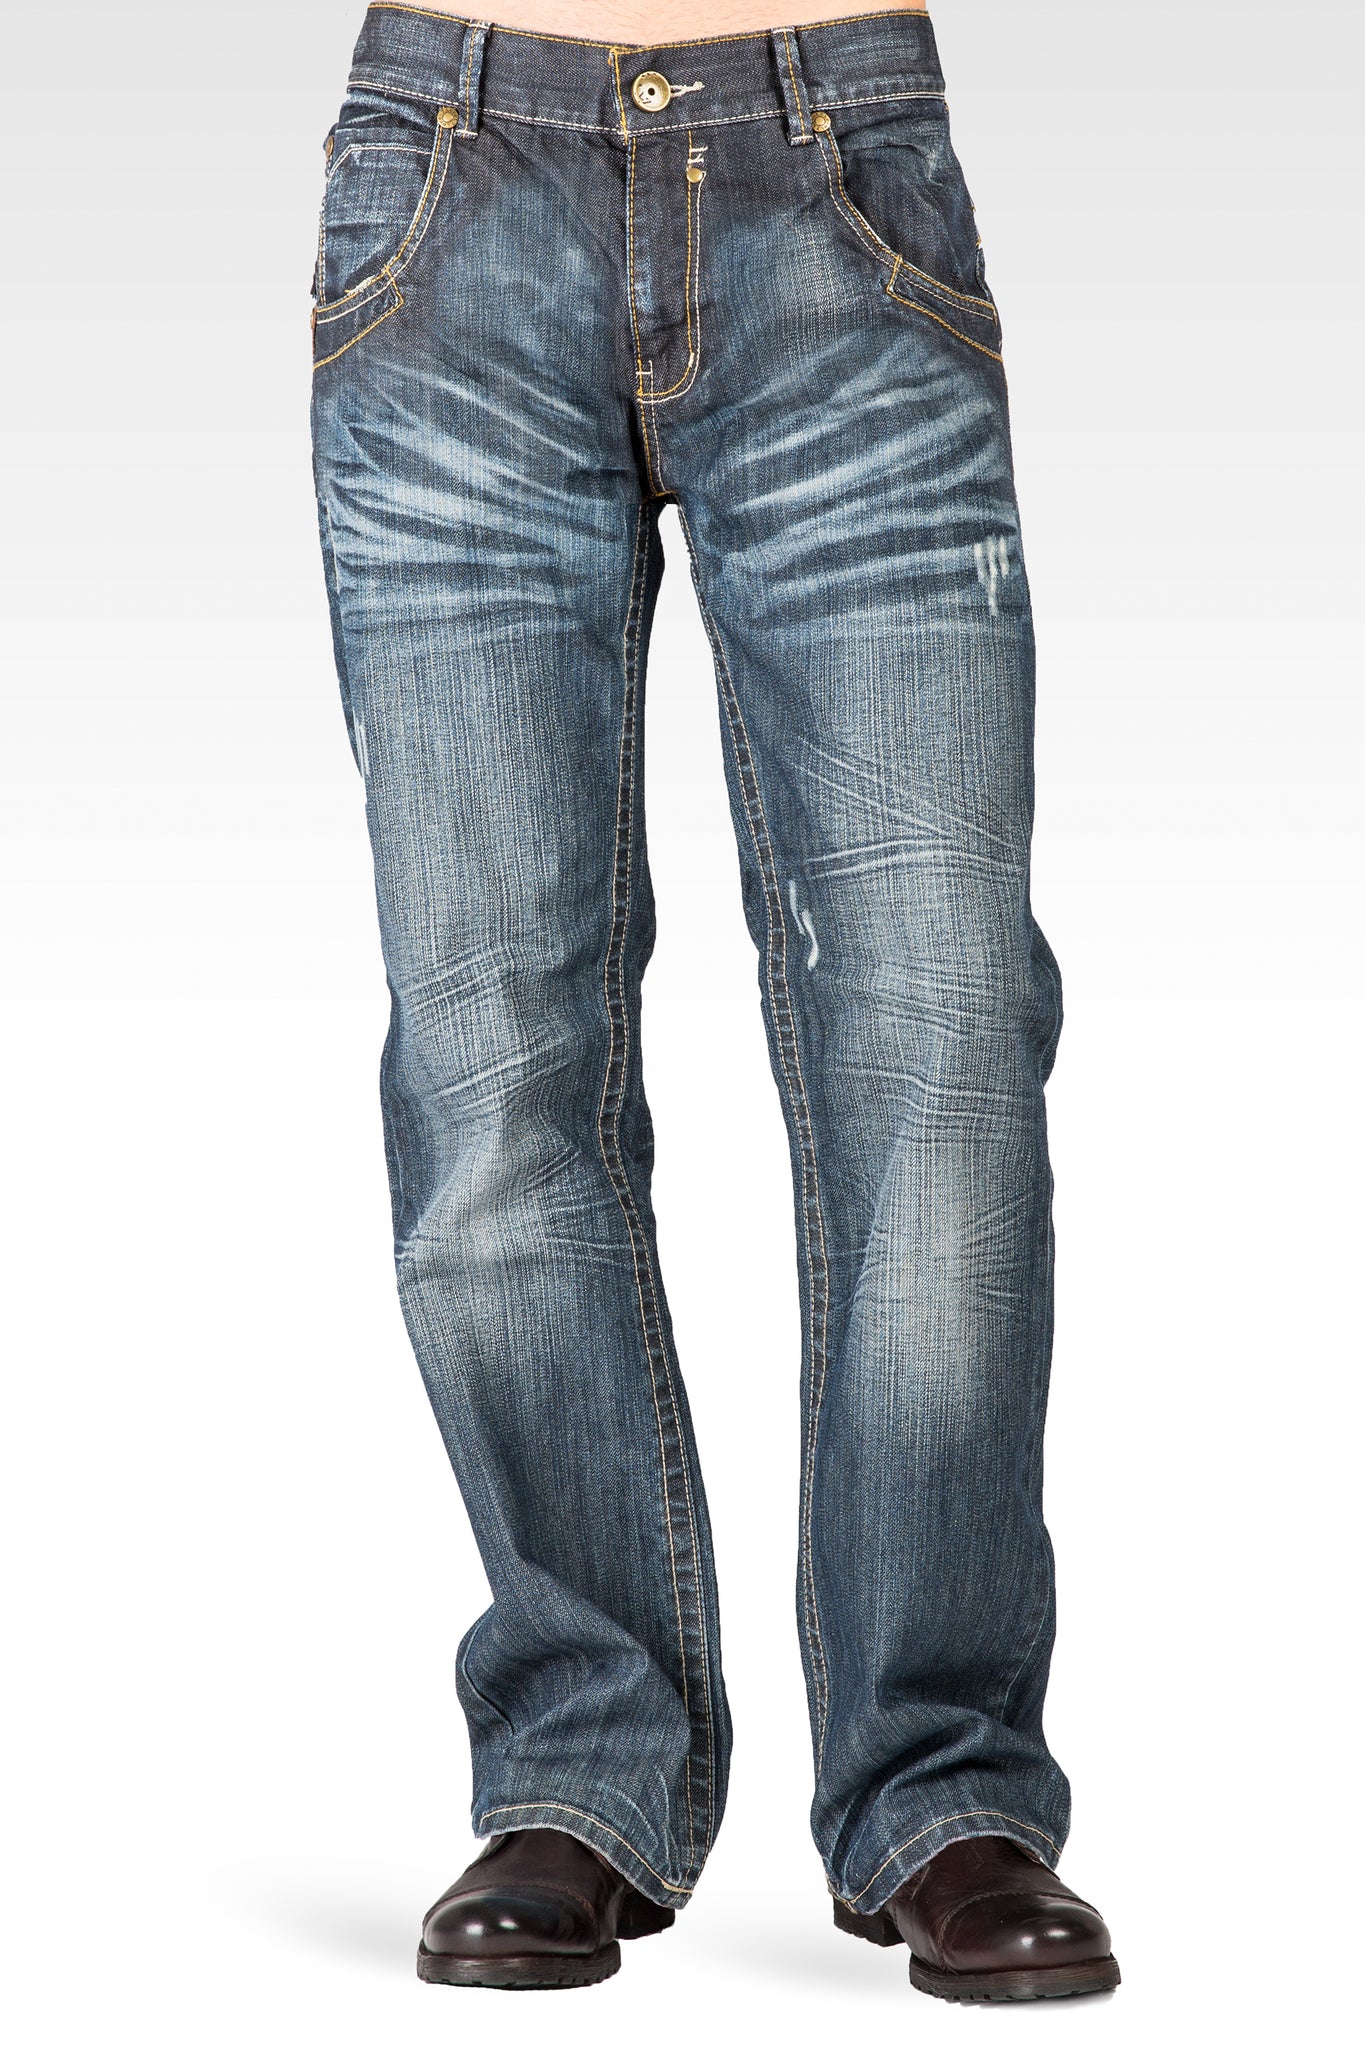 Men's Relaxed Bootcut Premium Denim Medium Blue Distressed Jean Zipper Utility Pocket